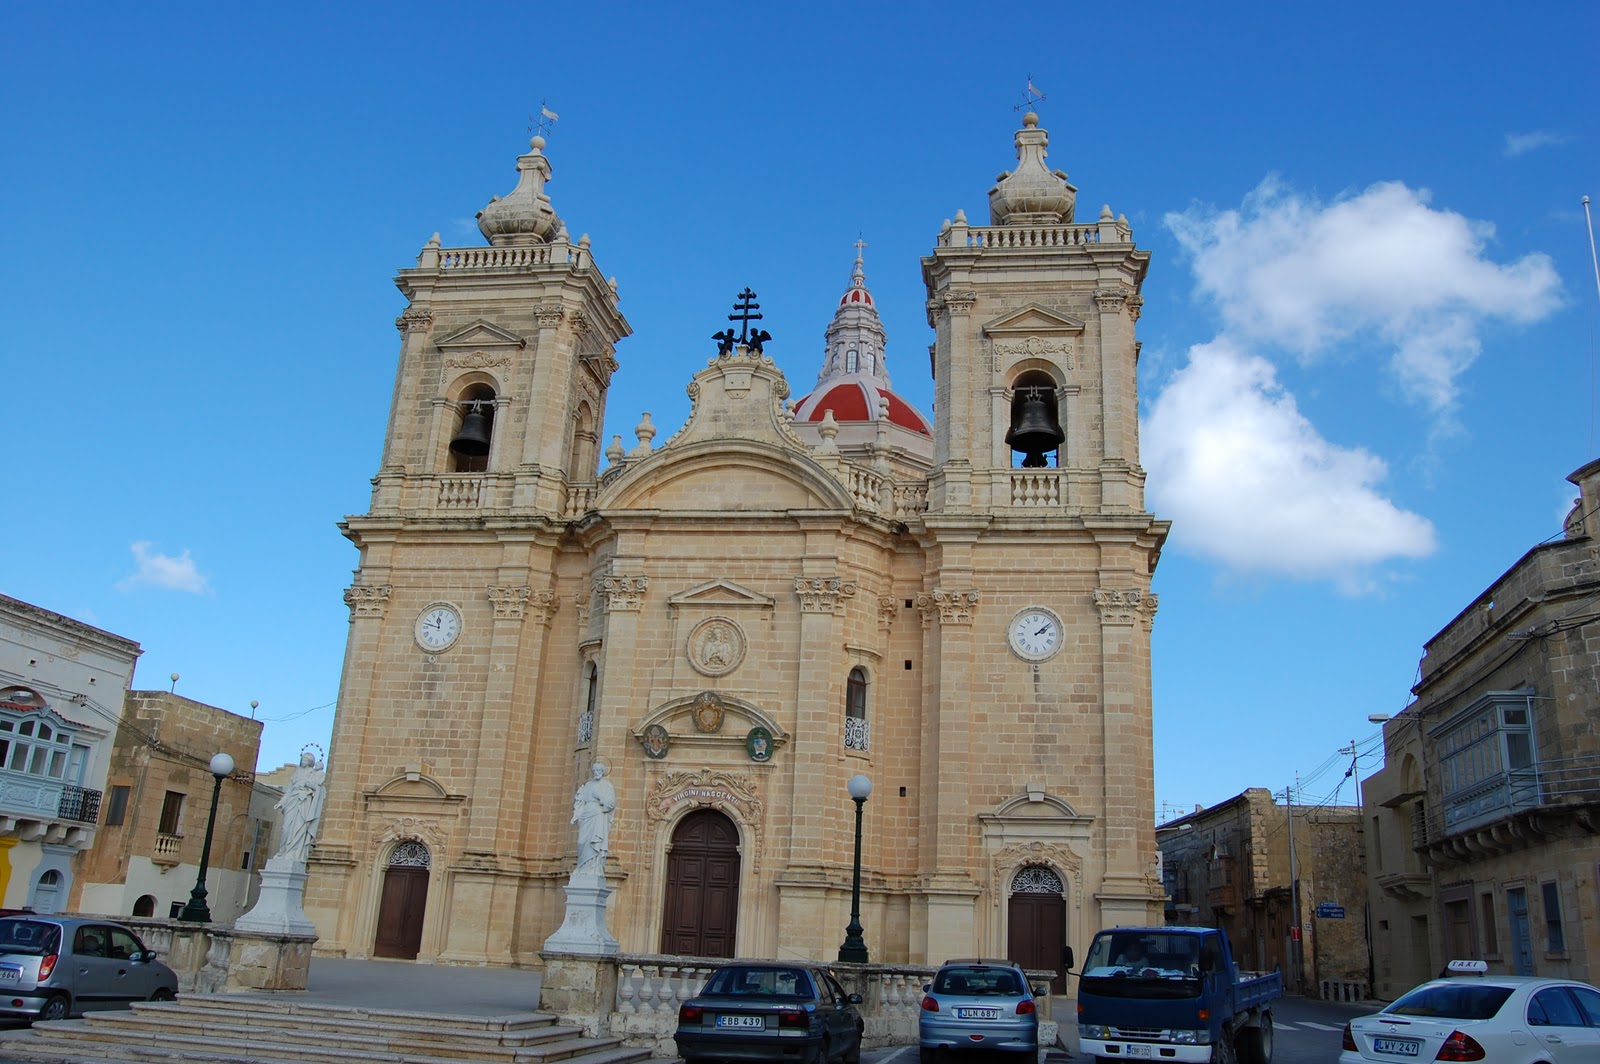 Best Place In Malta : Mellieha - Mellieħa, Island of Malta - YouTube